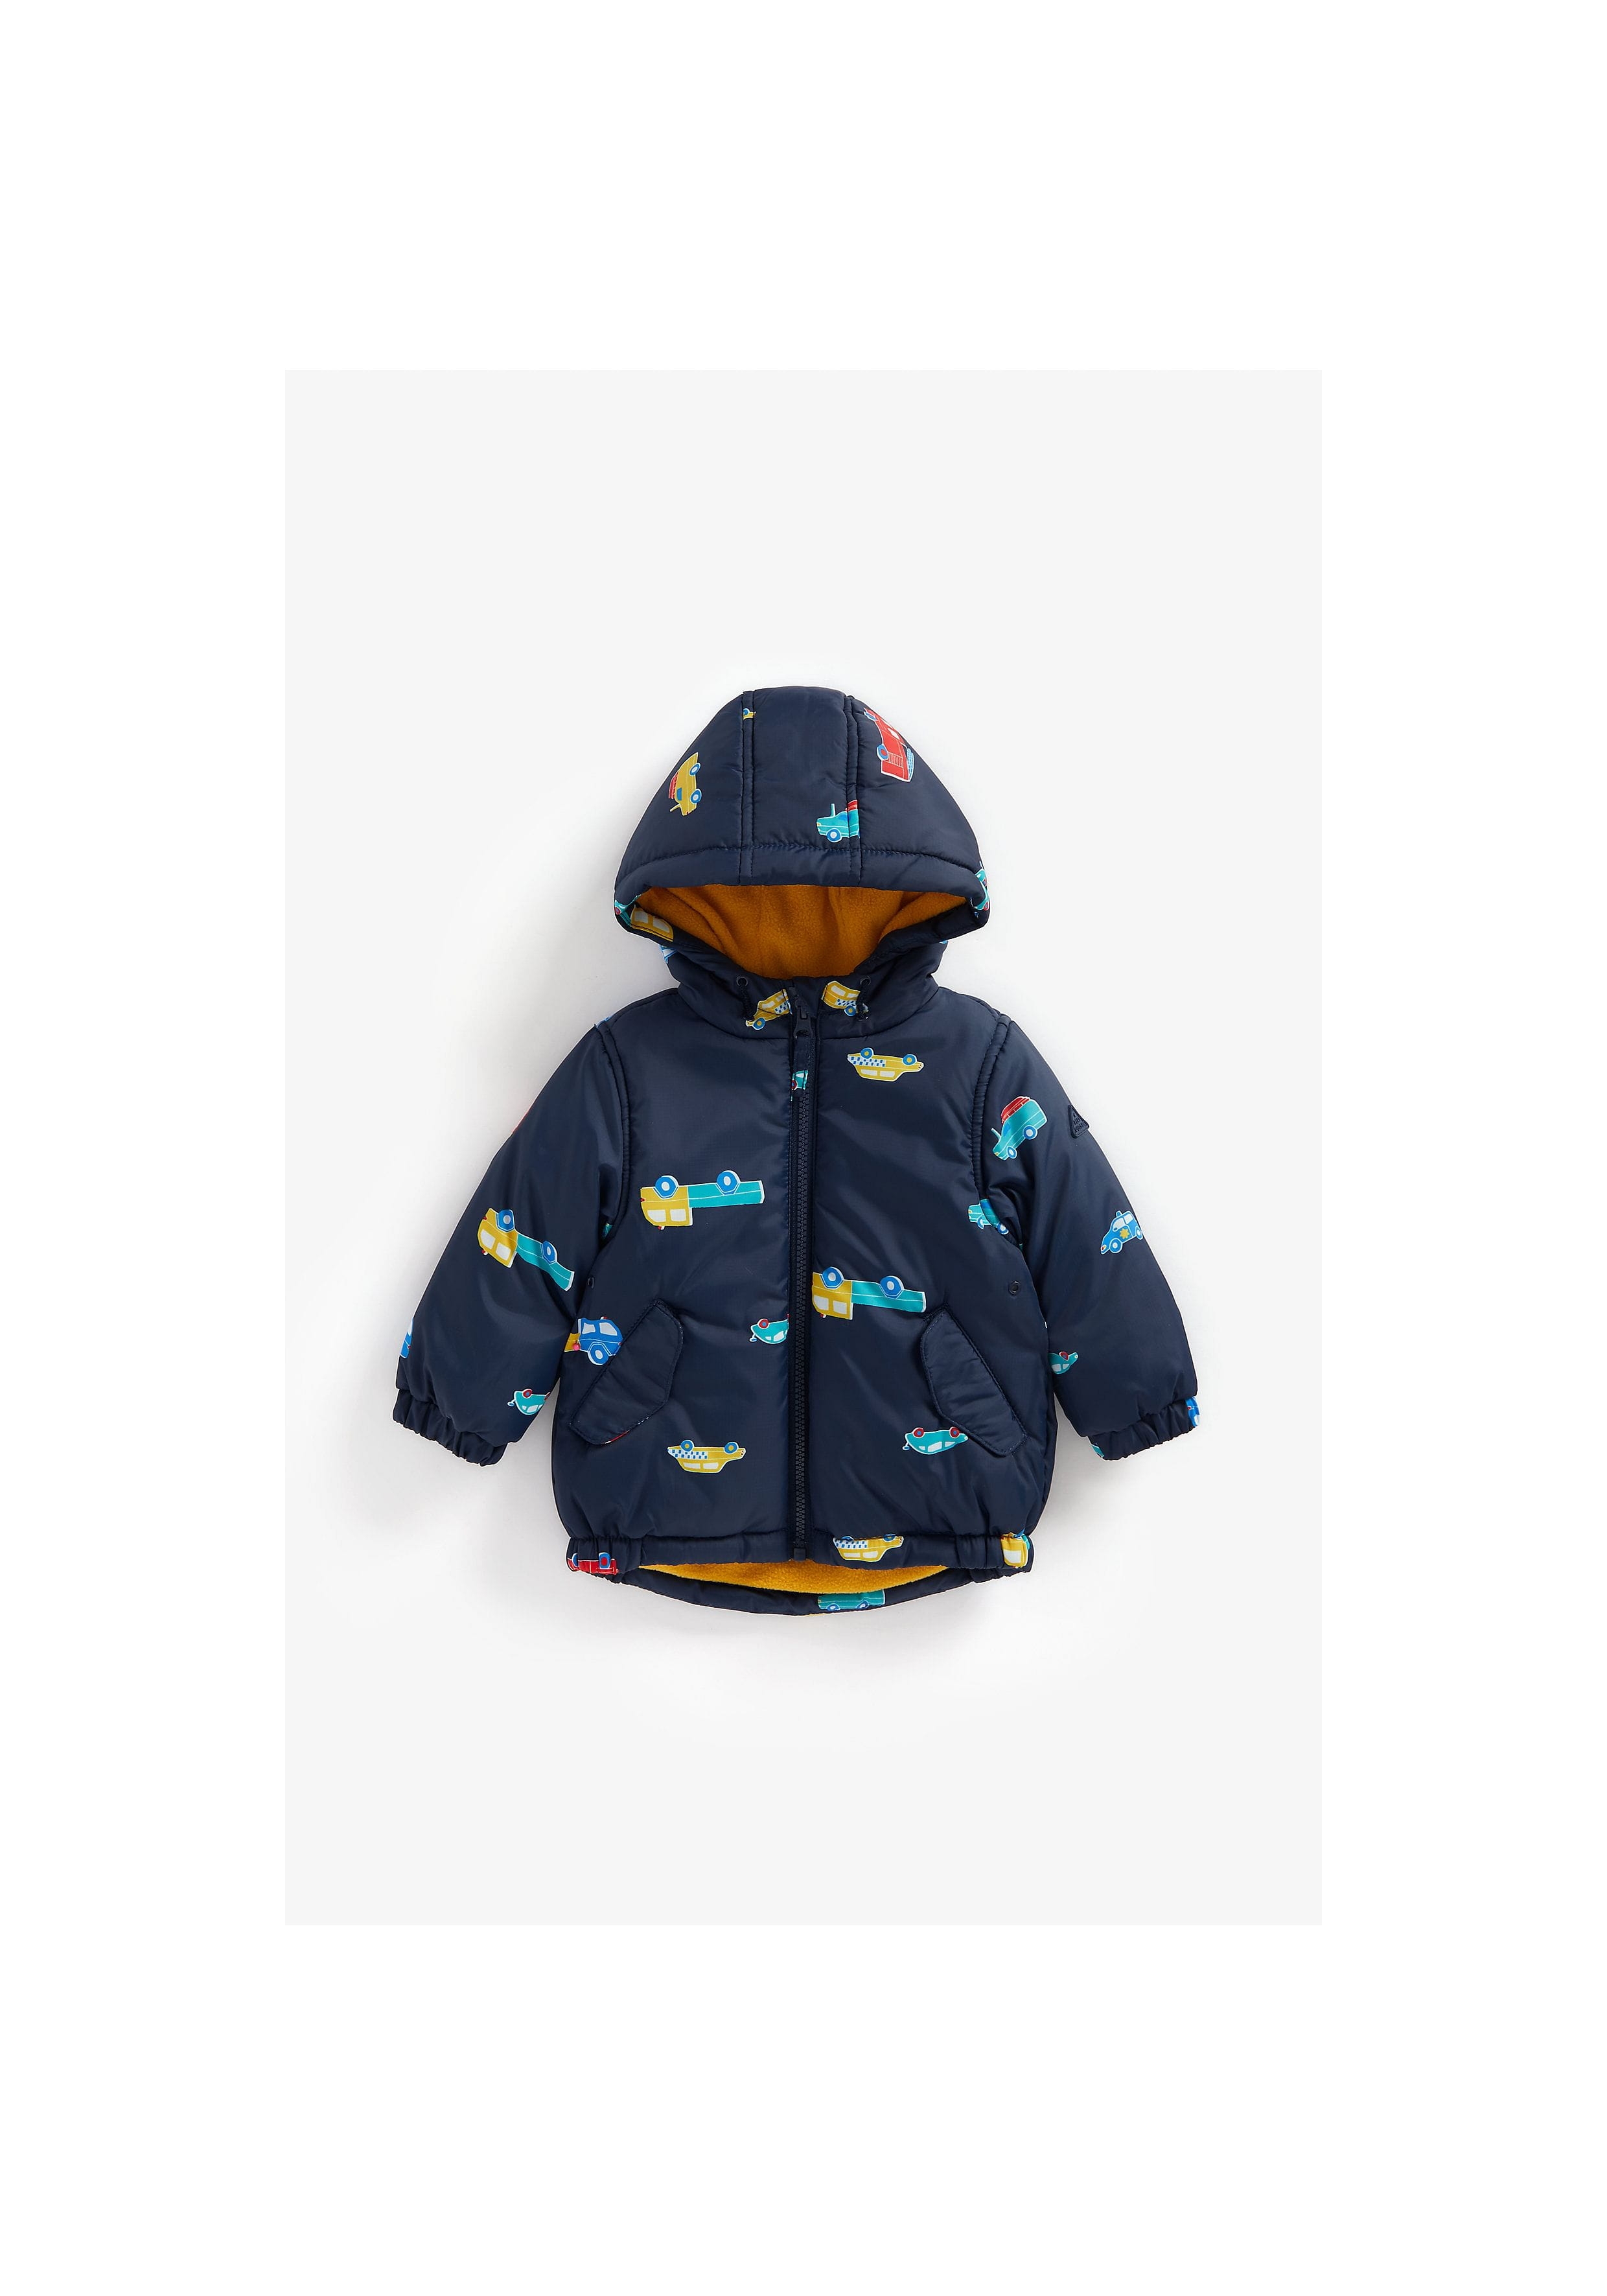 Mothercare | Boys Full Sleeves Fleece Lined Jacket Truck Print - Navy 0